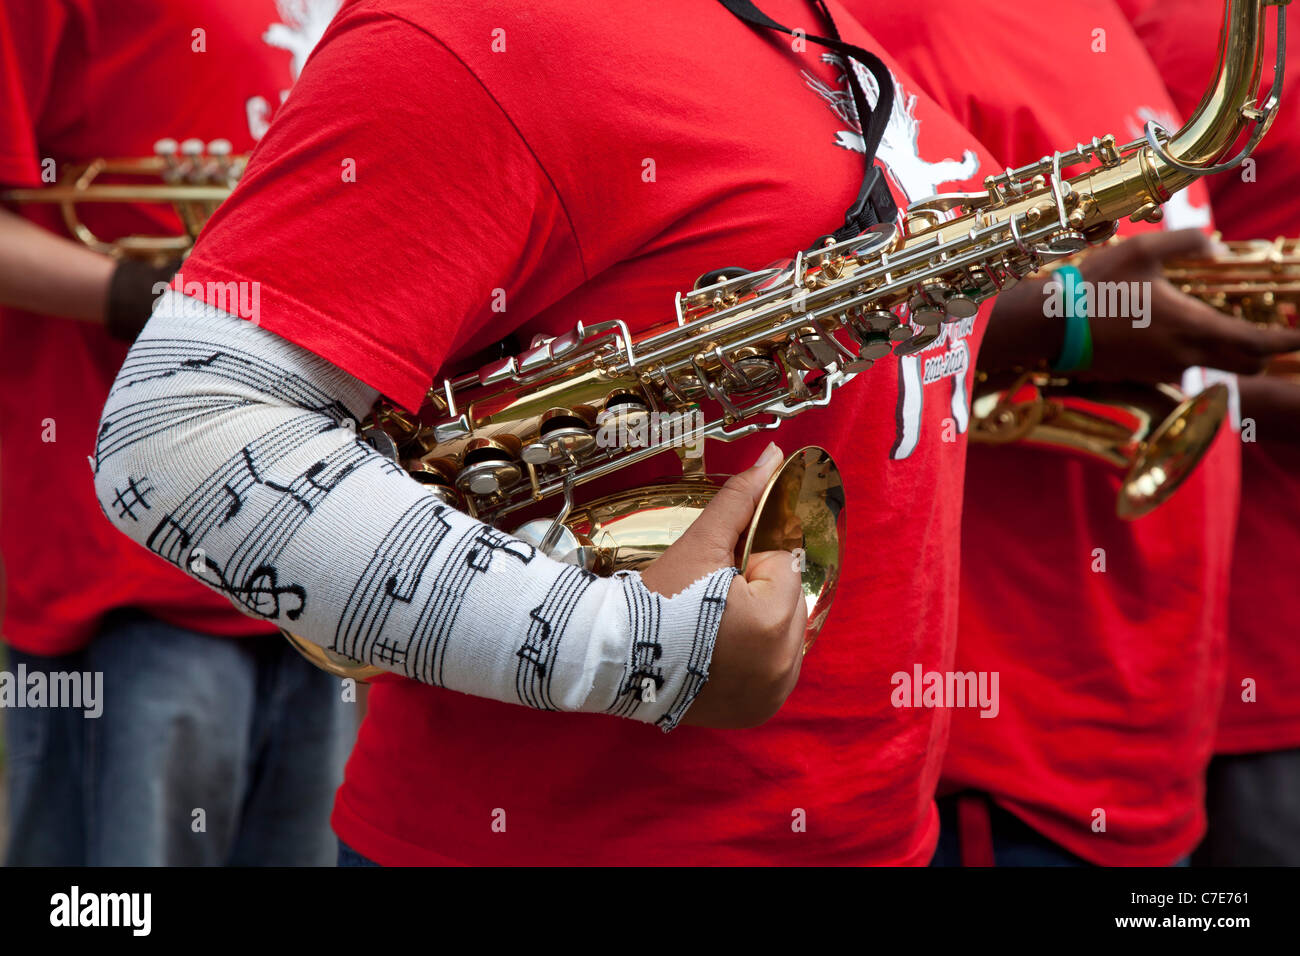 Lansing, Michigan - The Everett High School Marching Band. Stock Photo